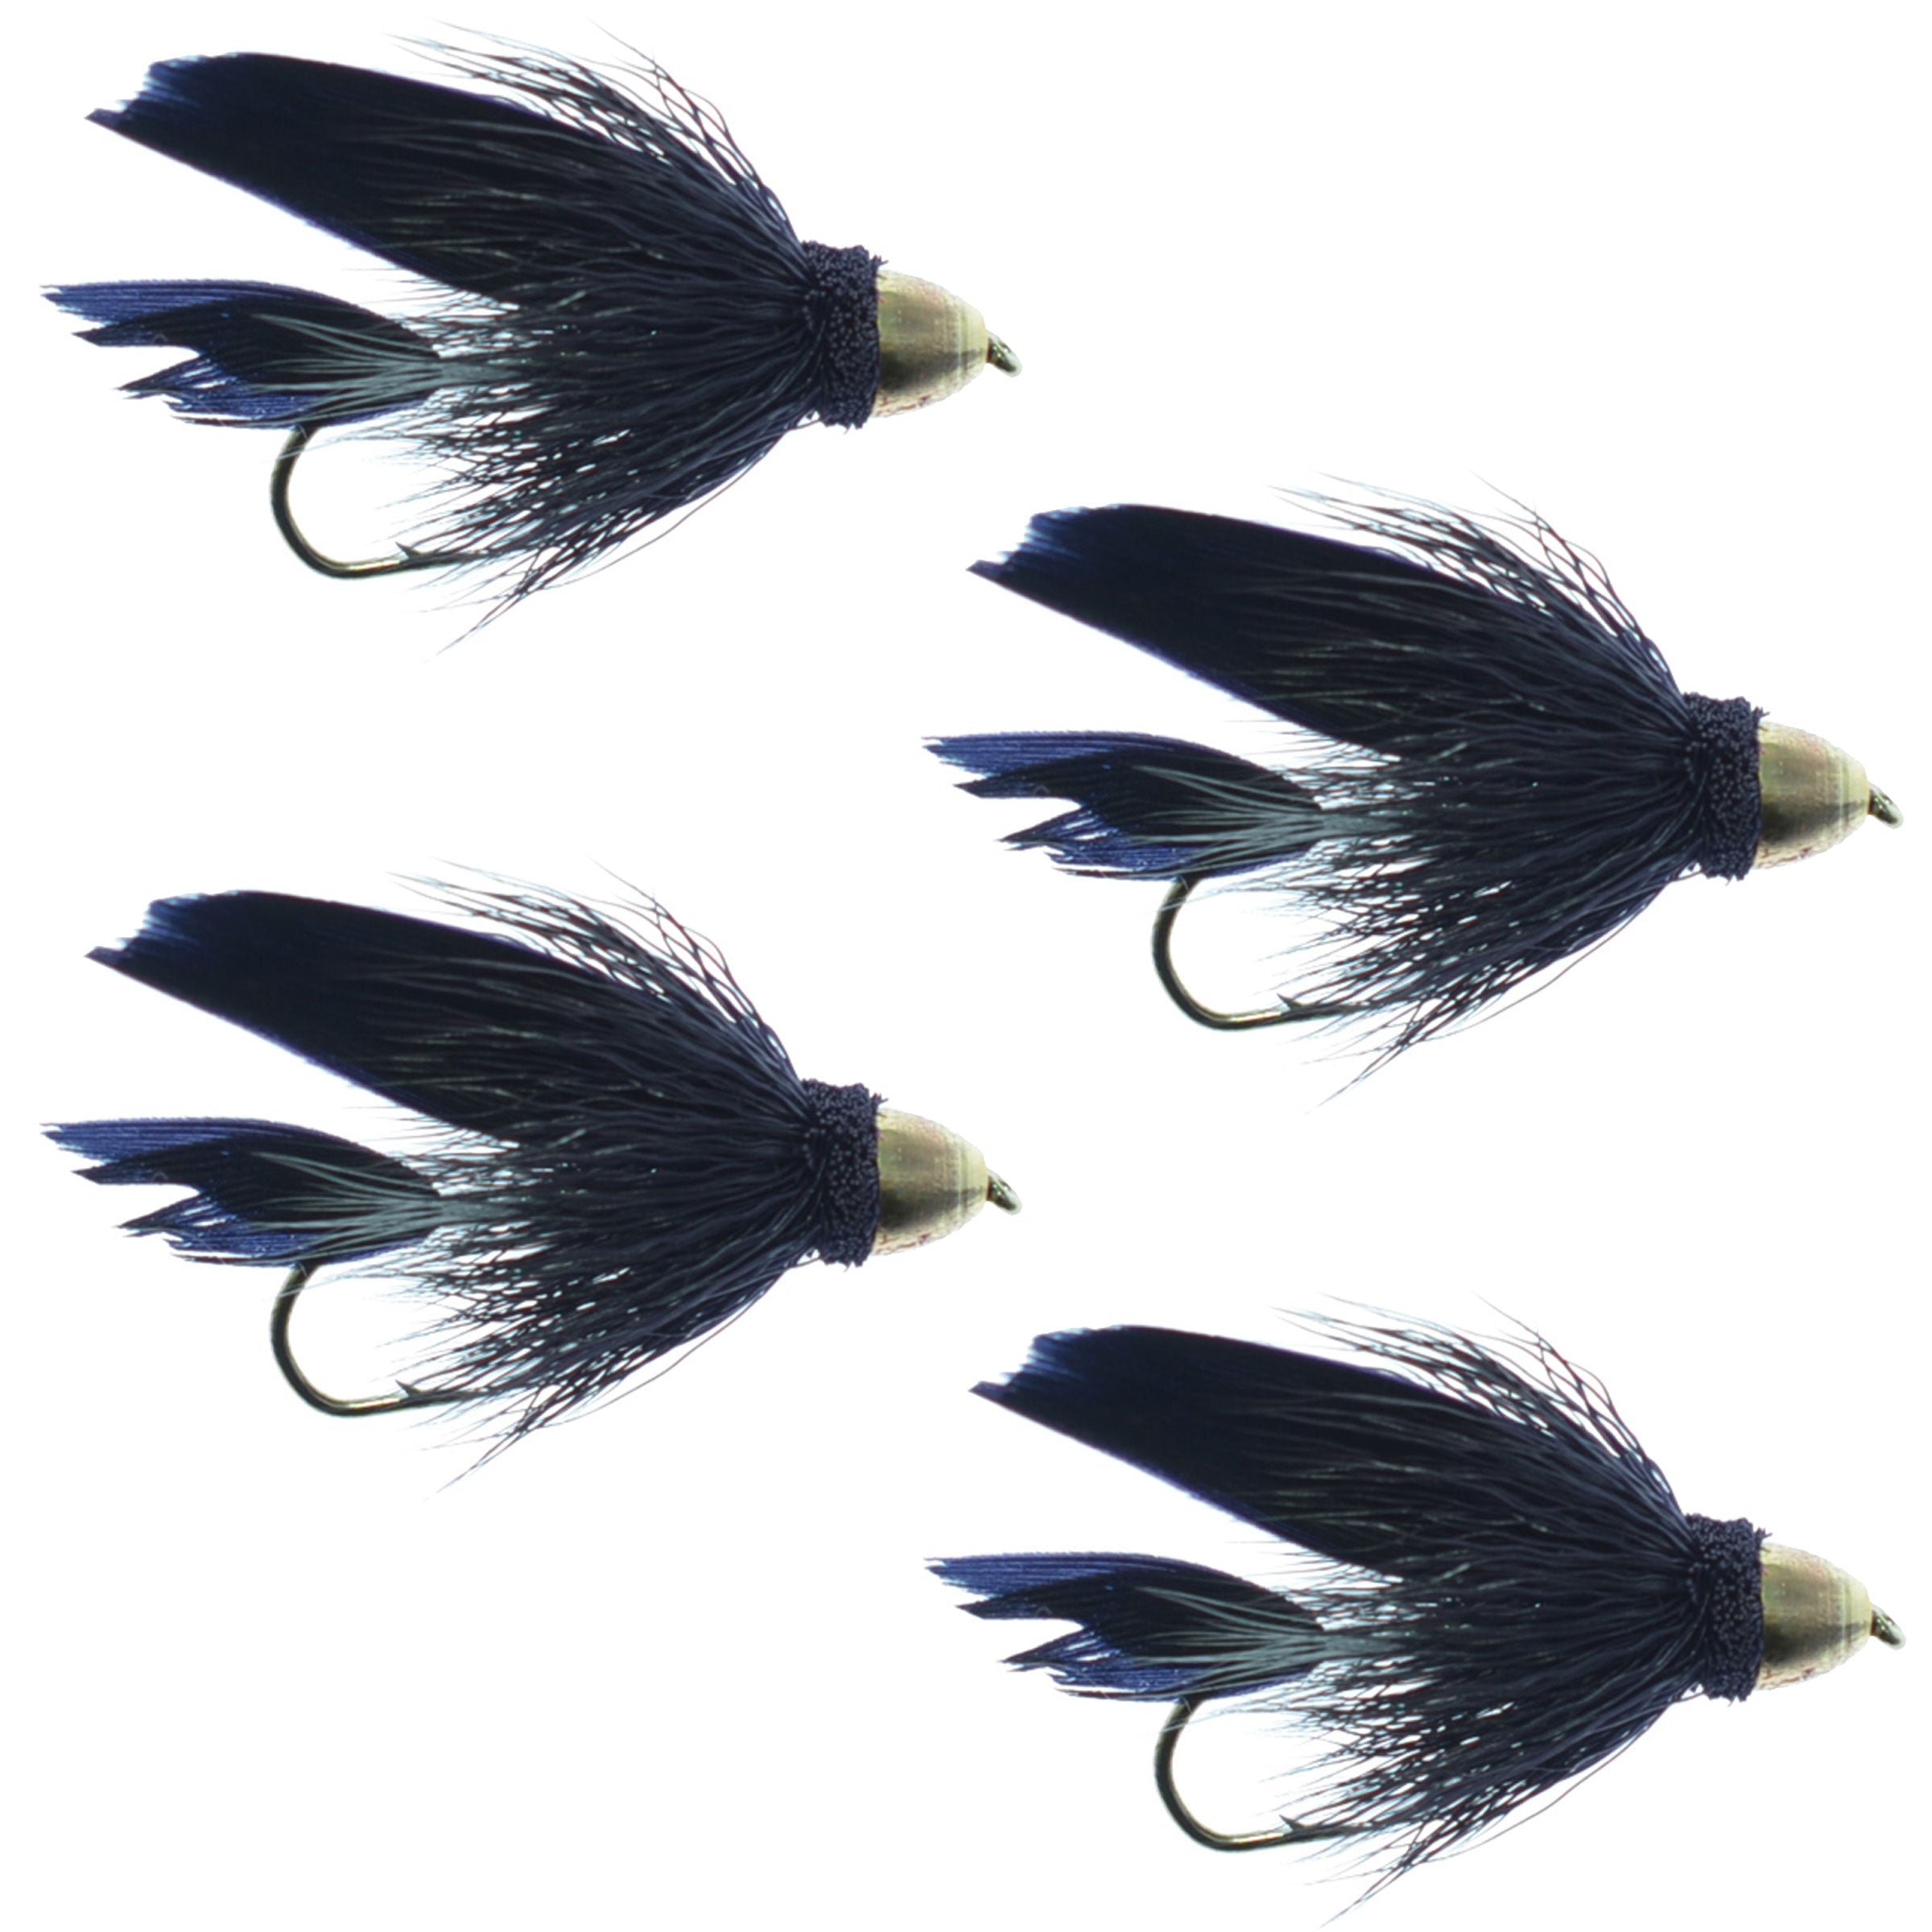 Cone Head Black Muddler Minnow Fly Fishing Flies - Classic Streamers - Set of 4 Flies Hook Size 6